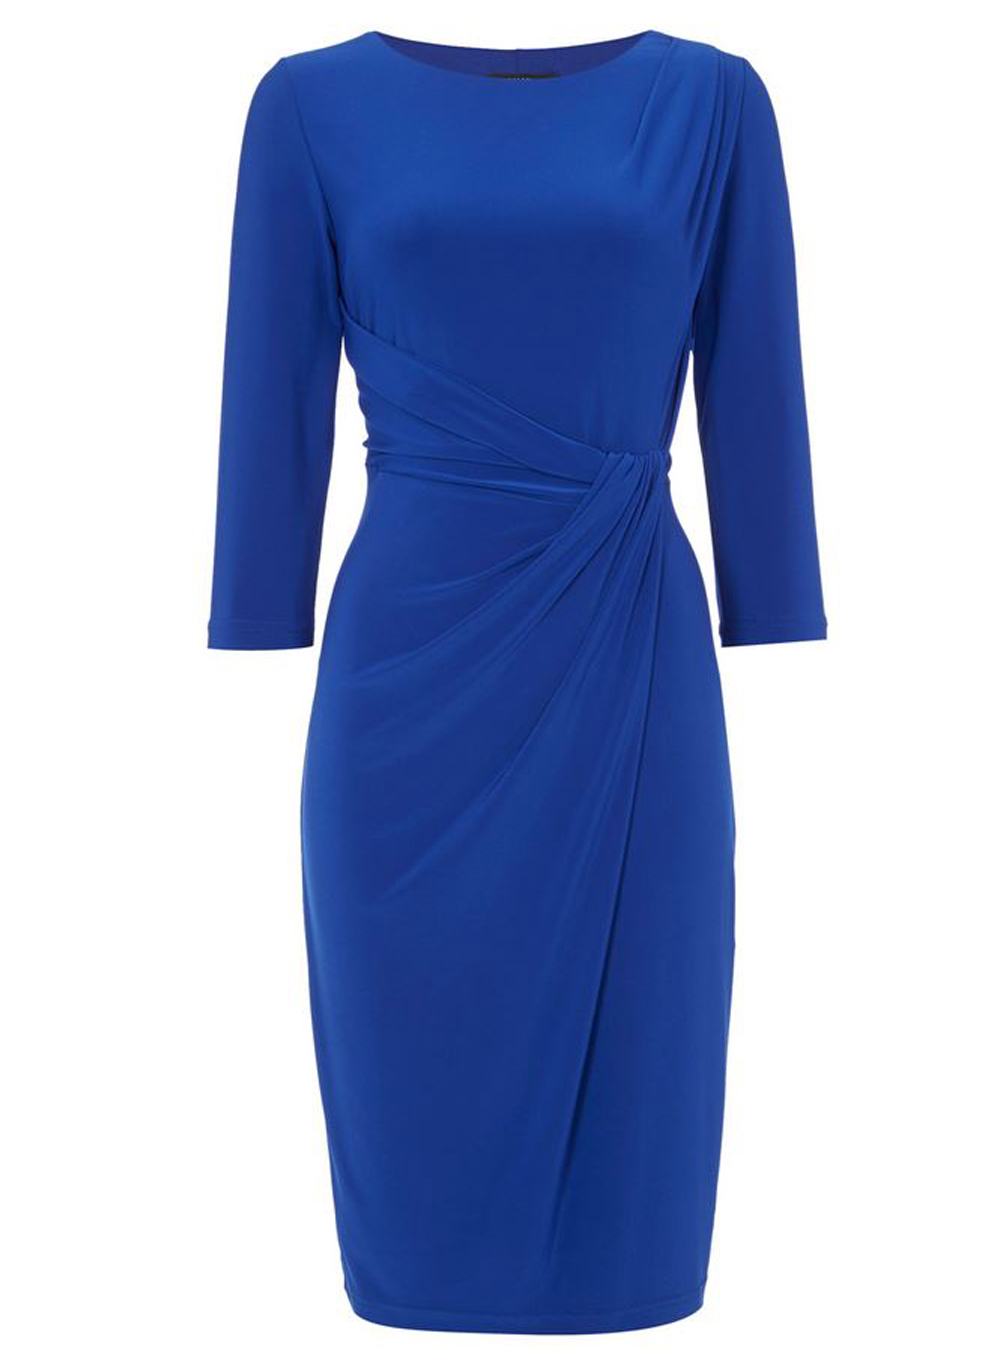 3/4 Sleeve Twist Waist Dress in Royal Blue - Roman Originals UK